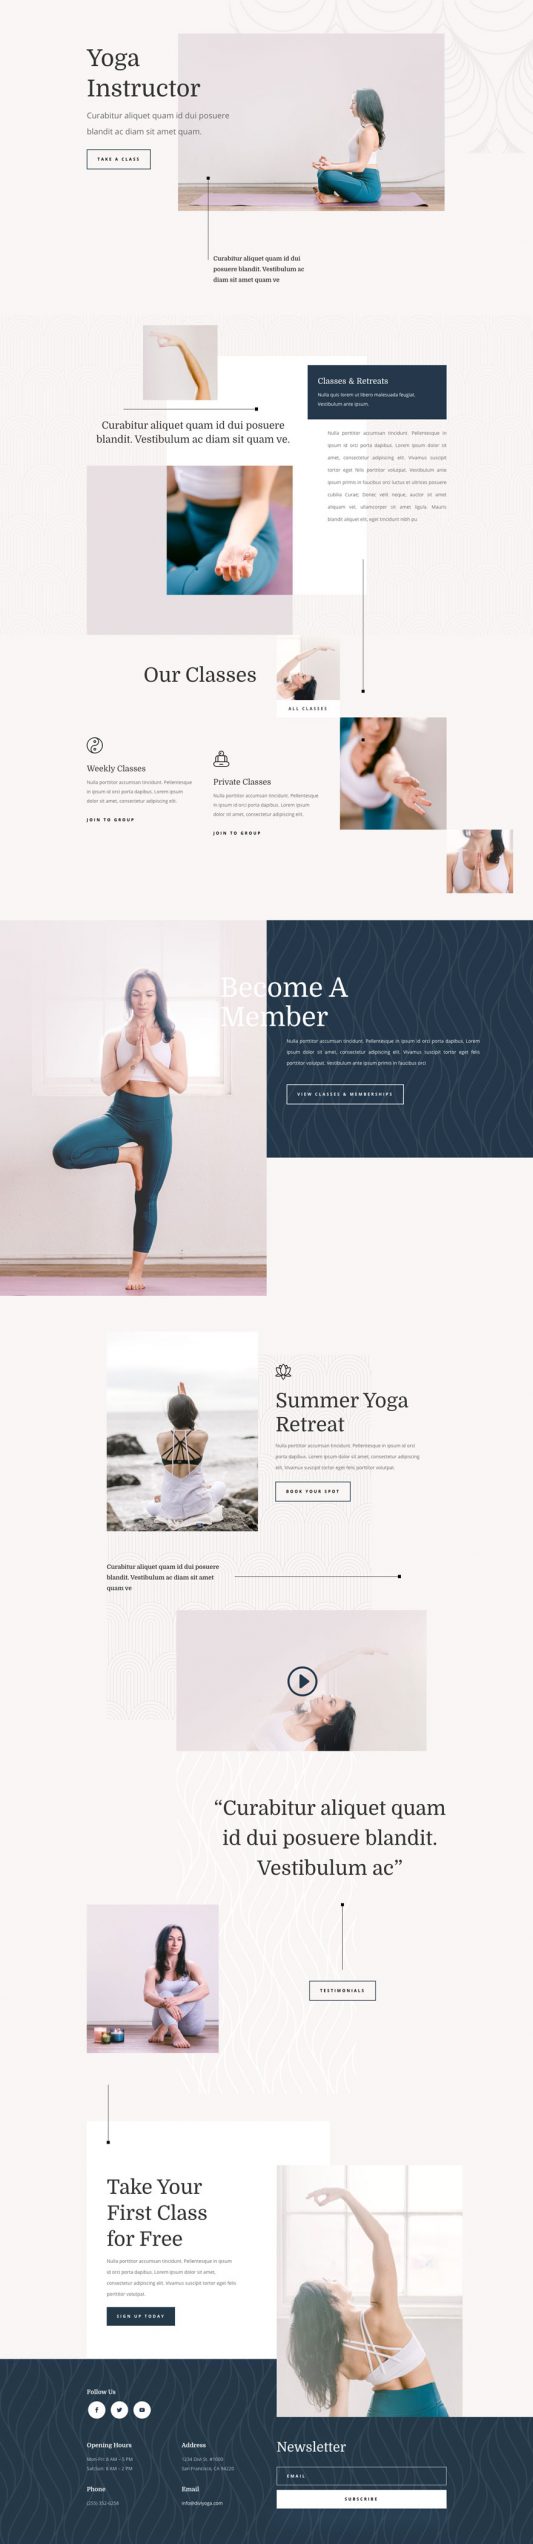 Yoga Instructor Landing Page